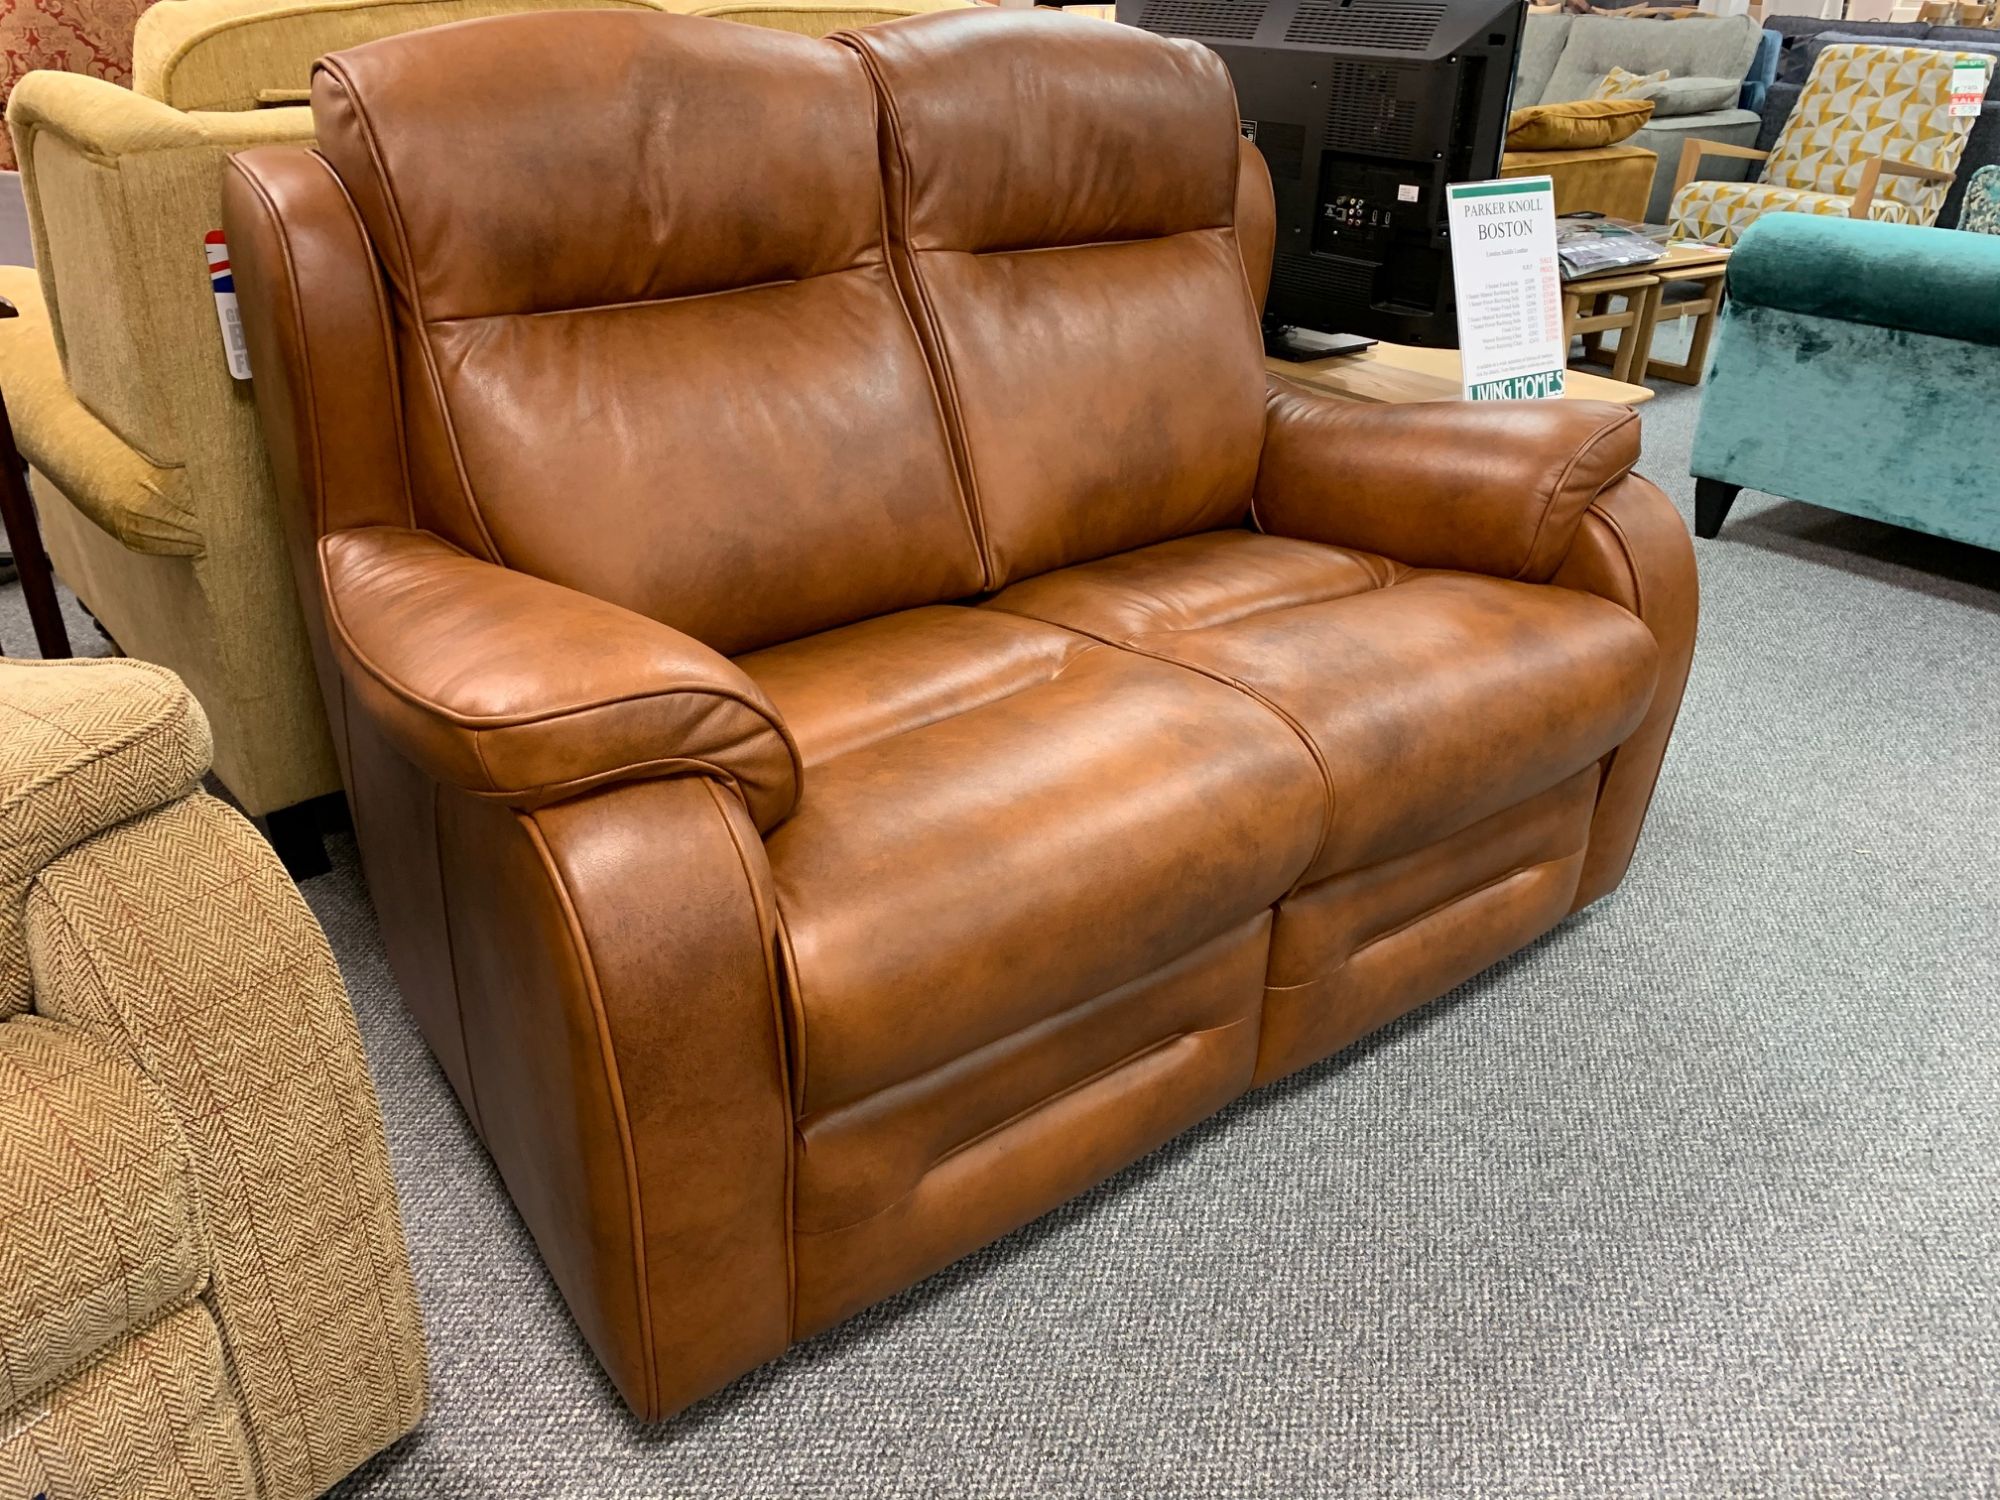 hanks furniture leather sofa